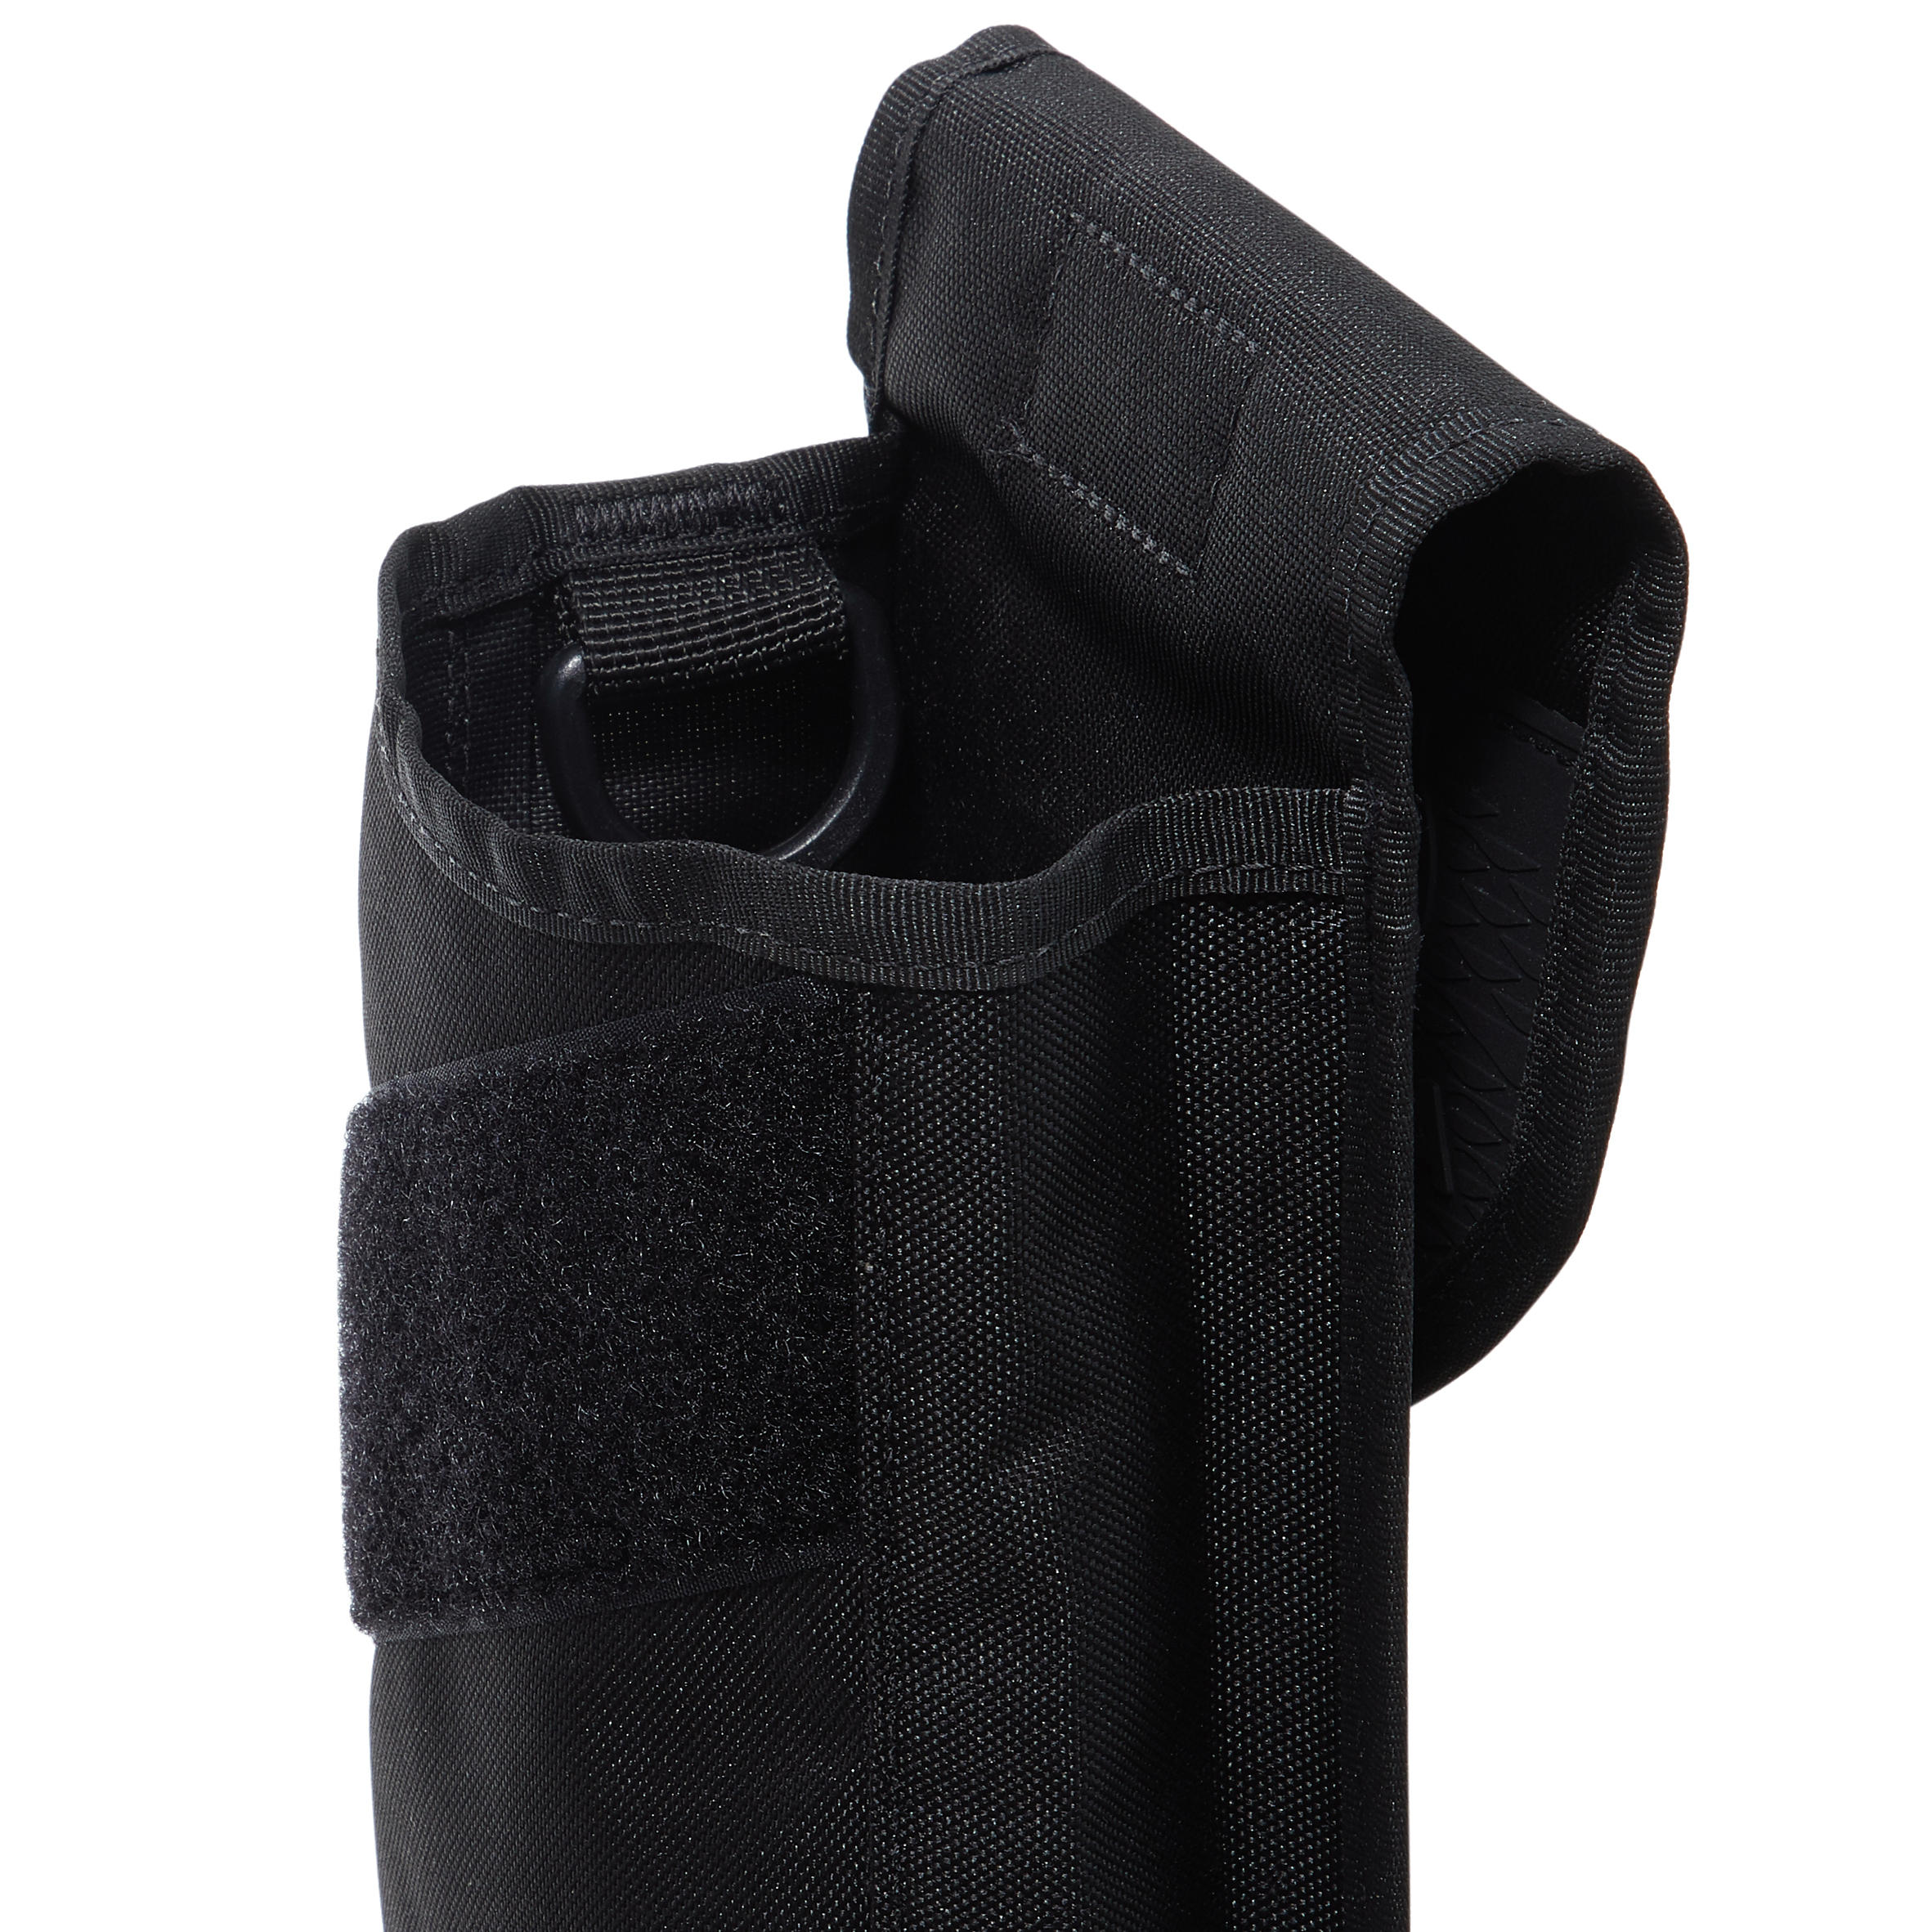 Accessories pocket for SCD 500D buoyancy vest 4/5